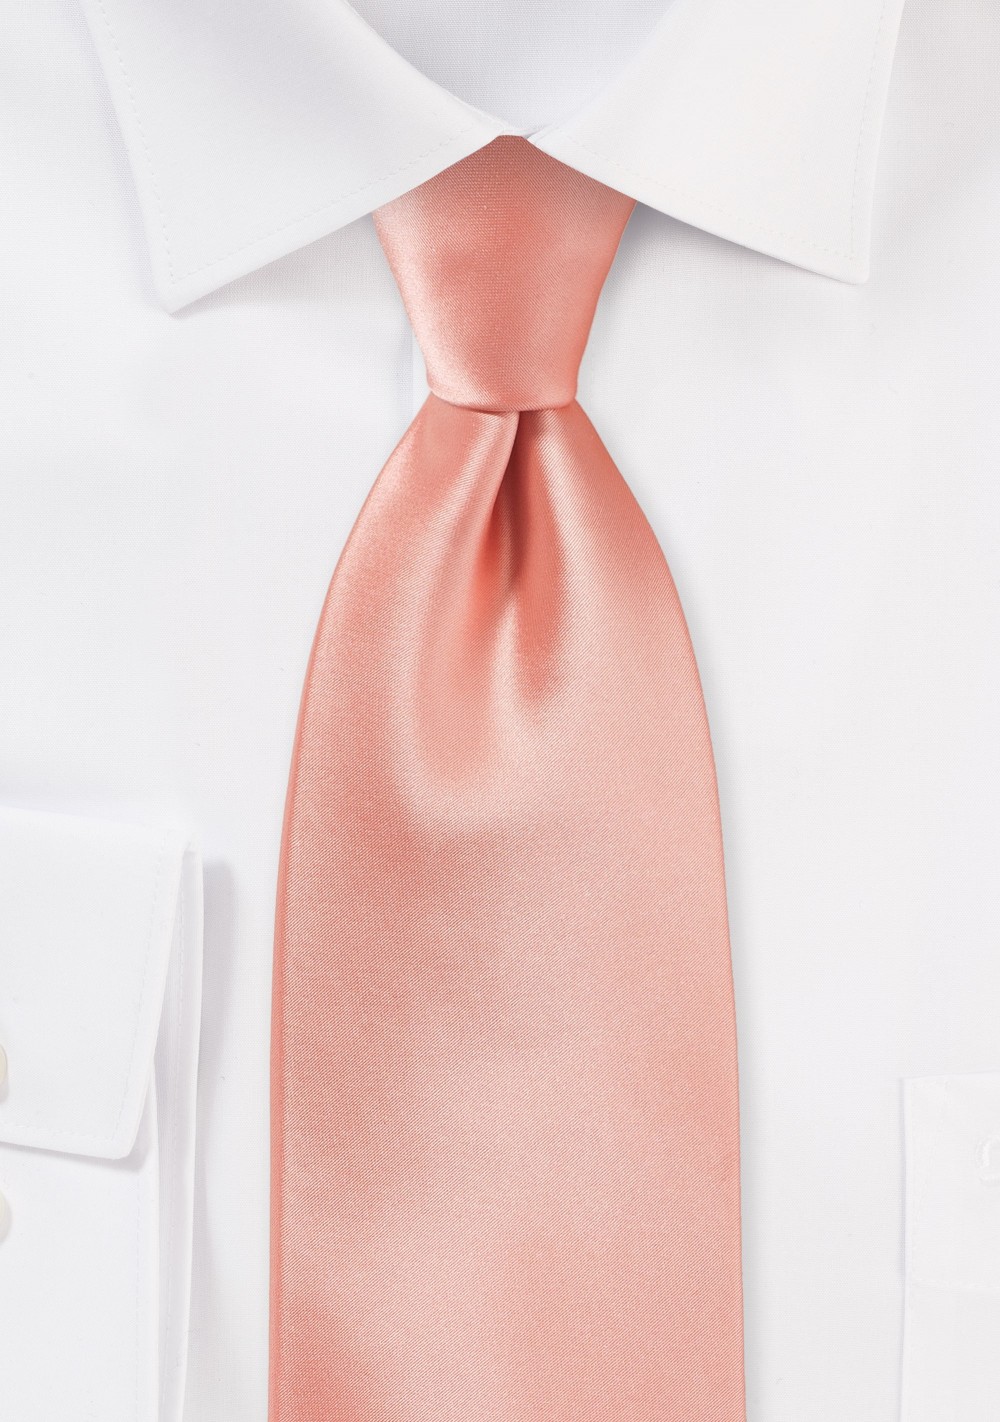 Solid Kids Tie in Pink-Coral Color